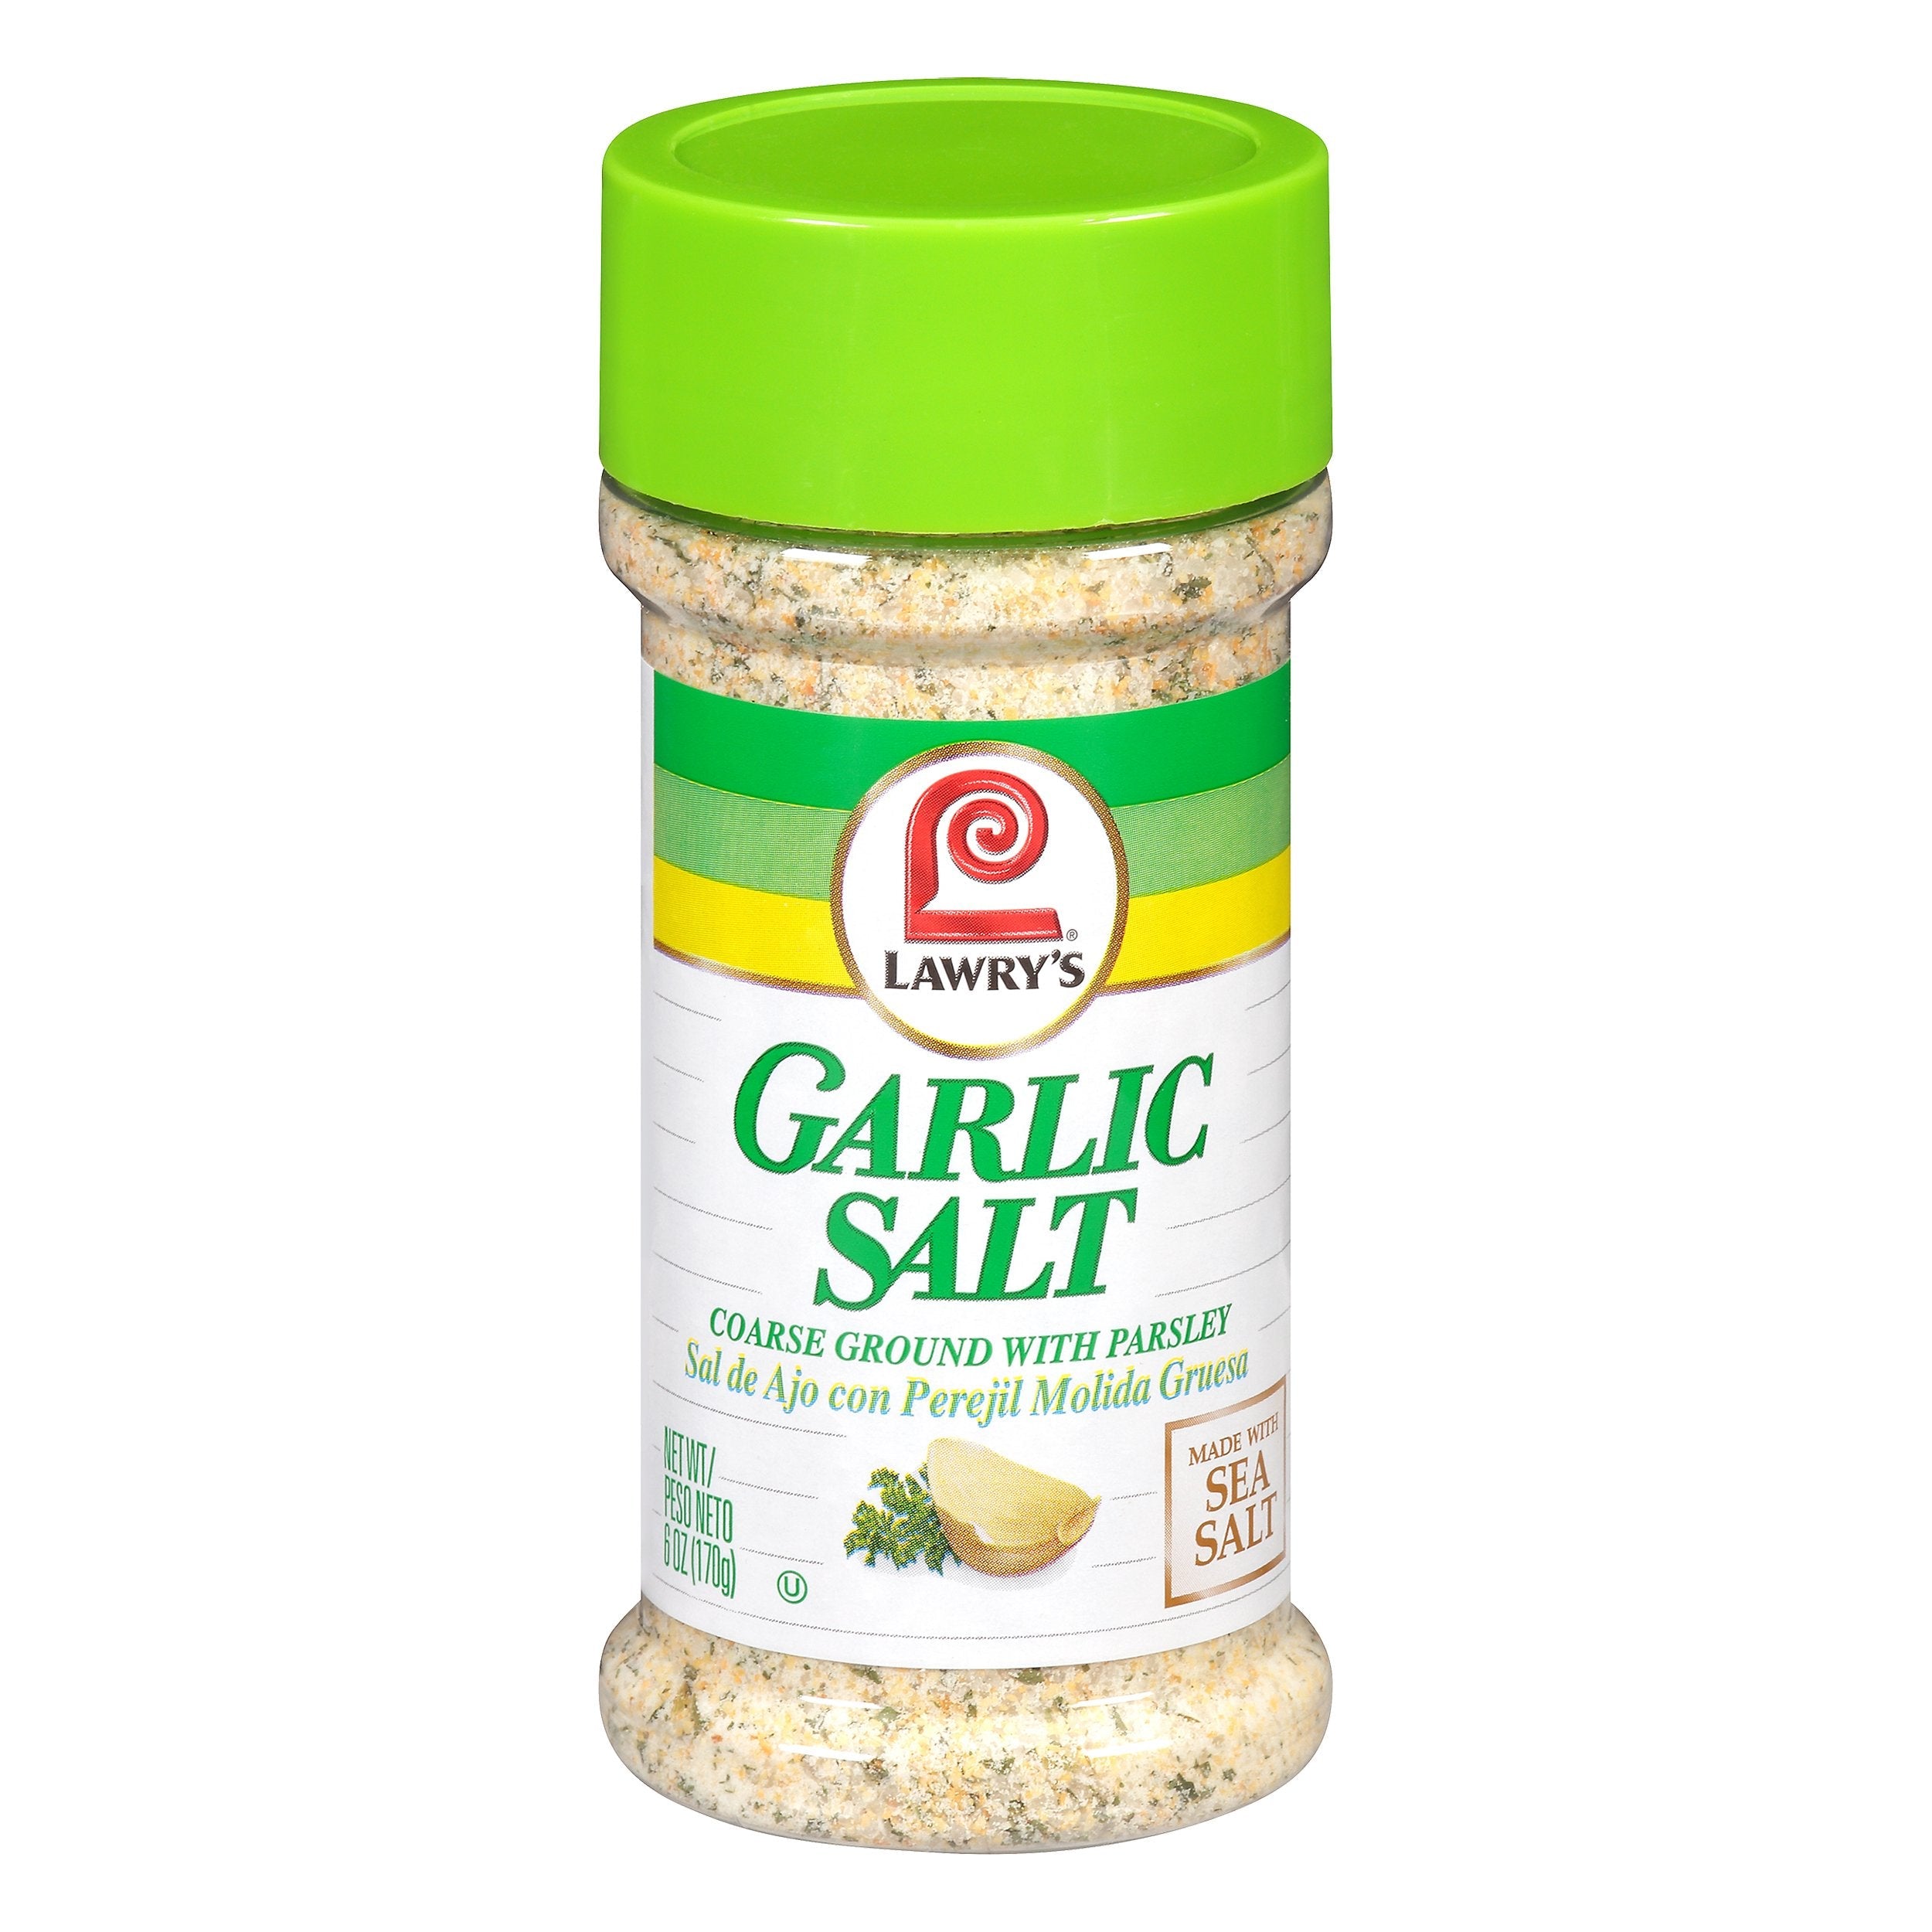 McCormick® Garlic Seasoned Salt Grinder